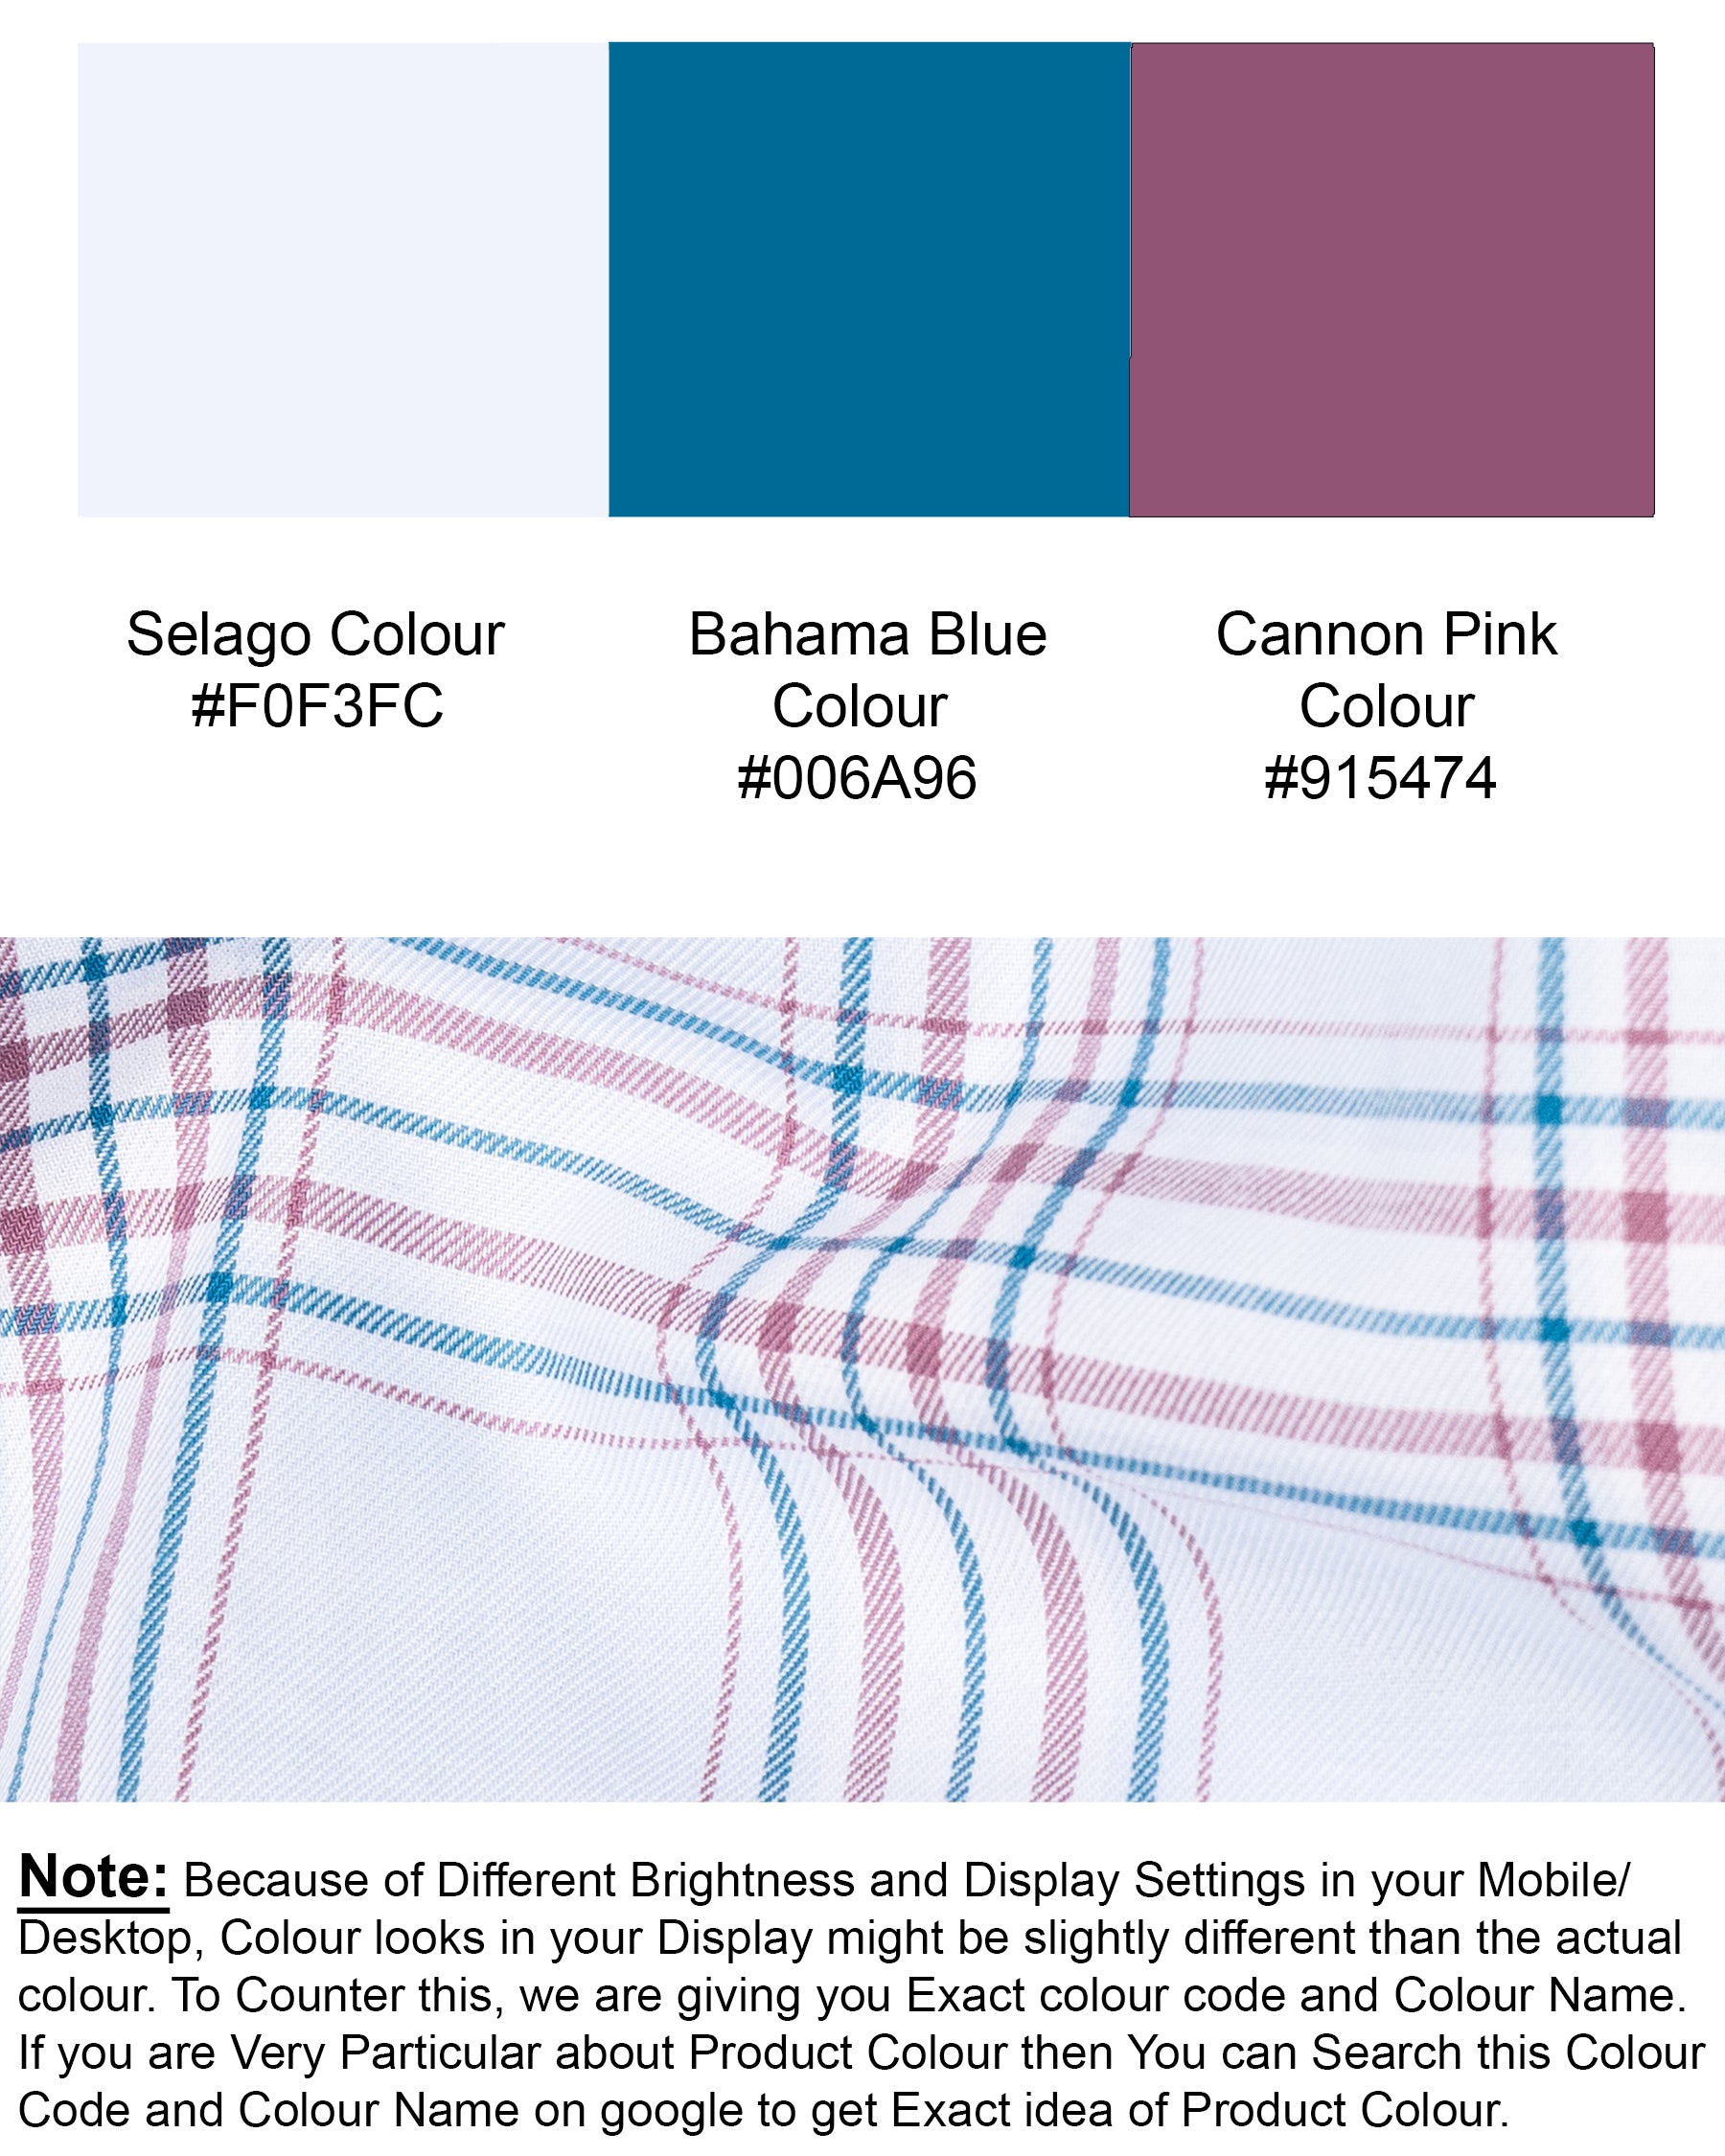 Selago and Bahama Blue Plaid Twill Textured Premium Cotton Shirt